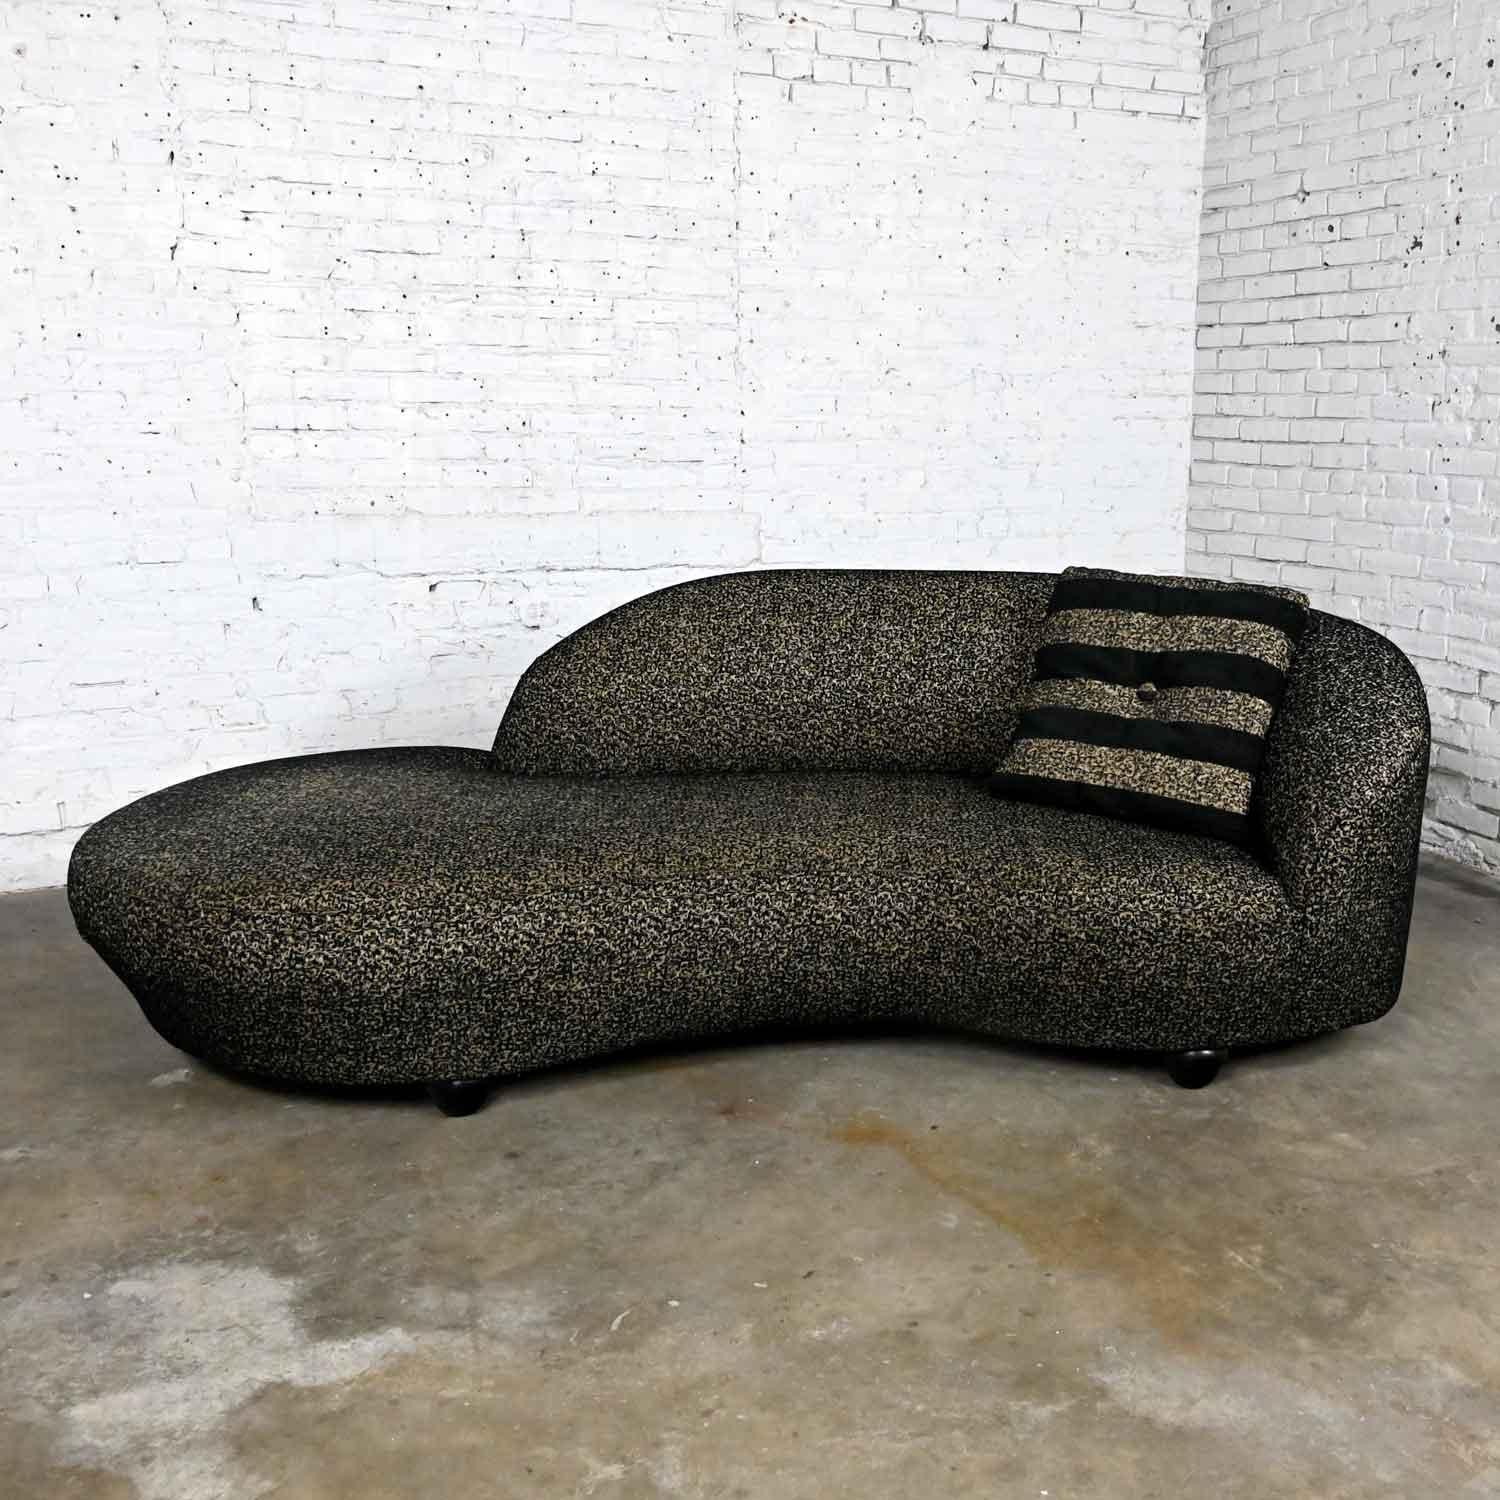 Postmodern Black & Khaki Sort of Animal Print Serpentine Cloud-Like Chaise Sofa For Sale 6